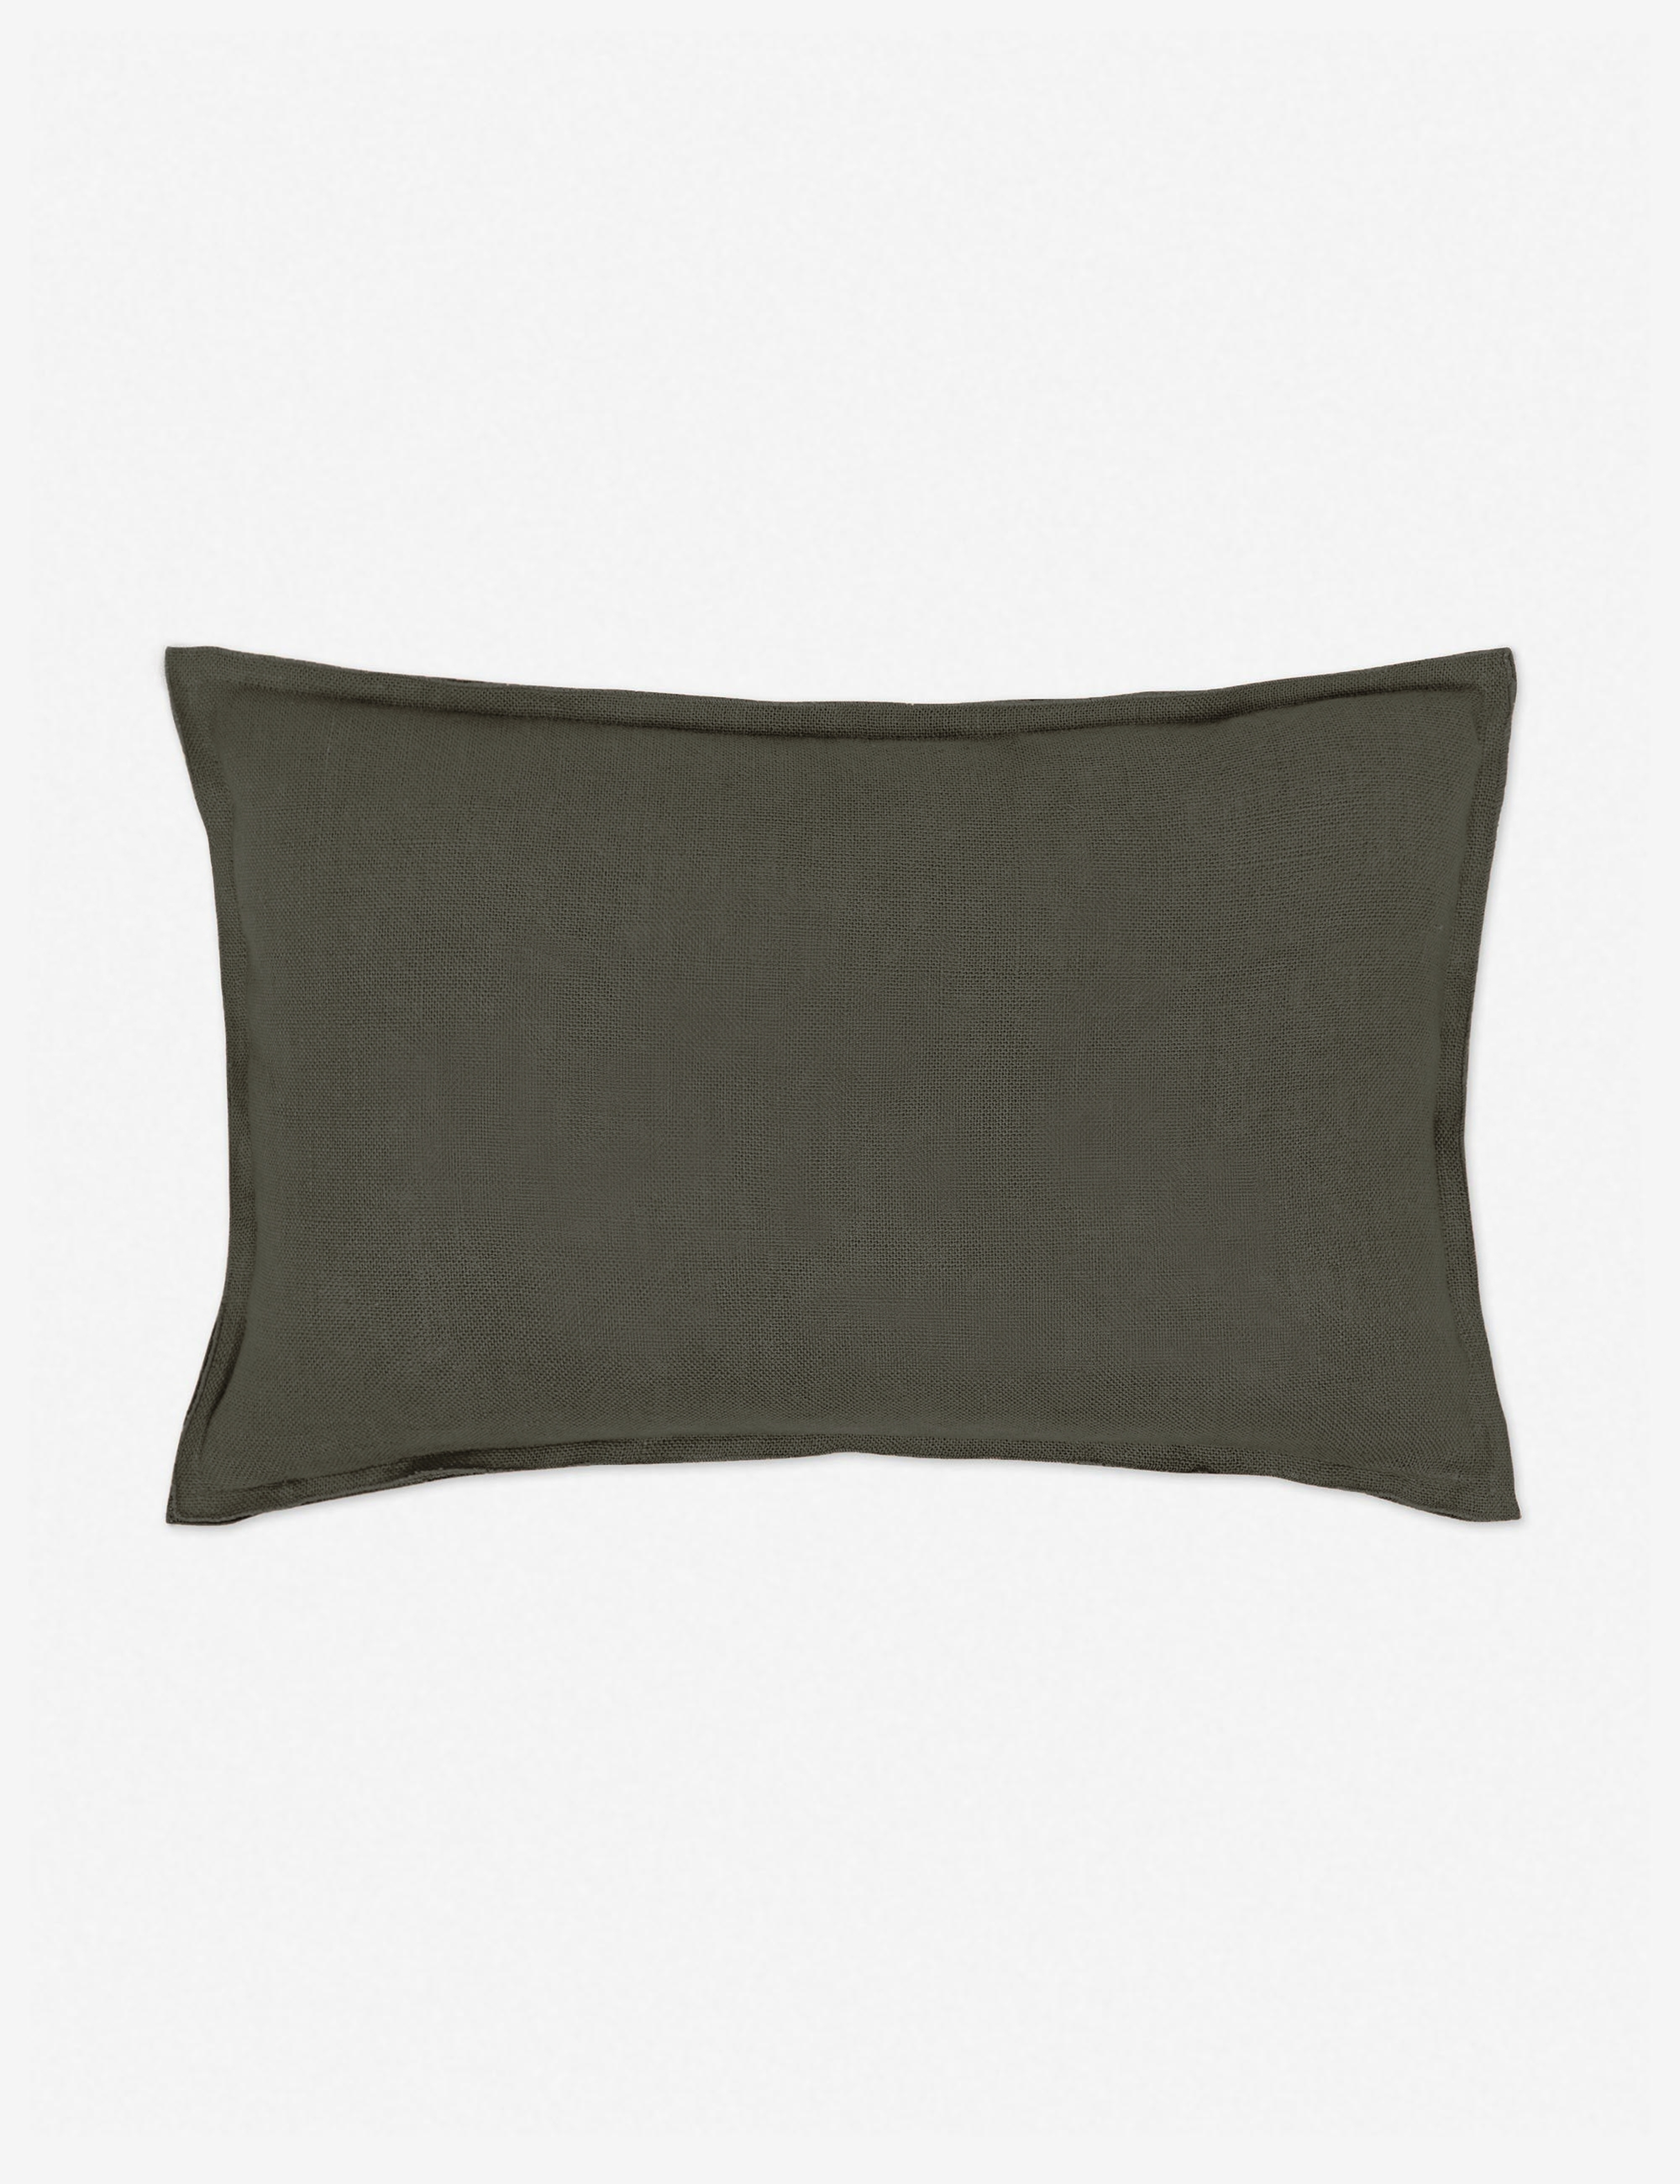 Arlo Linen Lumbar Pillow, Conifer, 20" x 13" - Lulu and Georgia